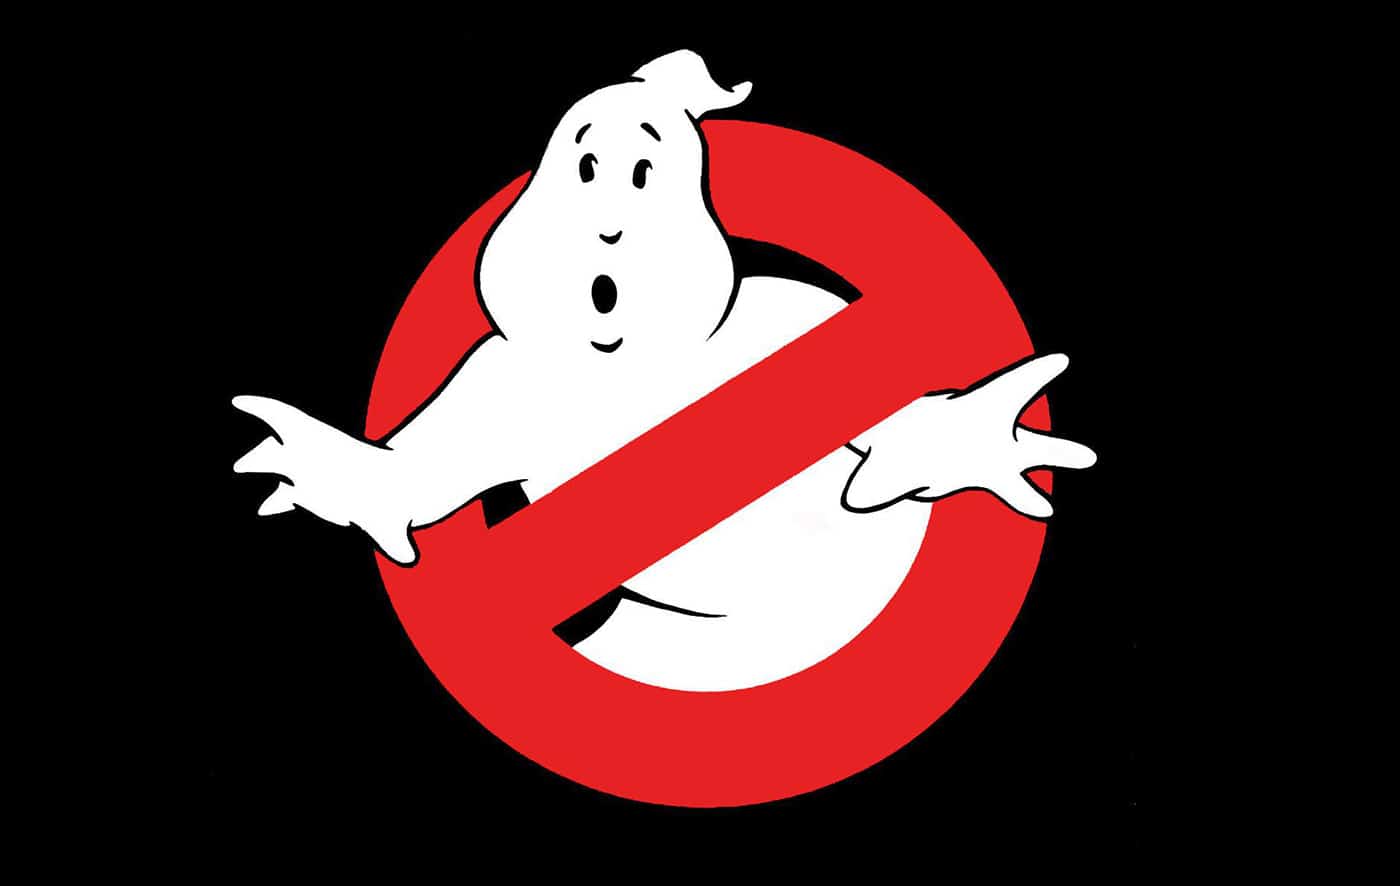 ghostbusters logo on black